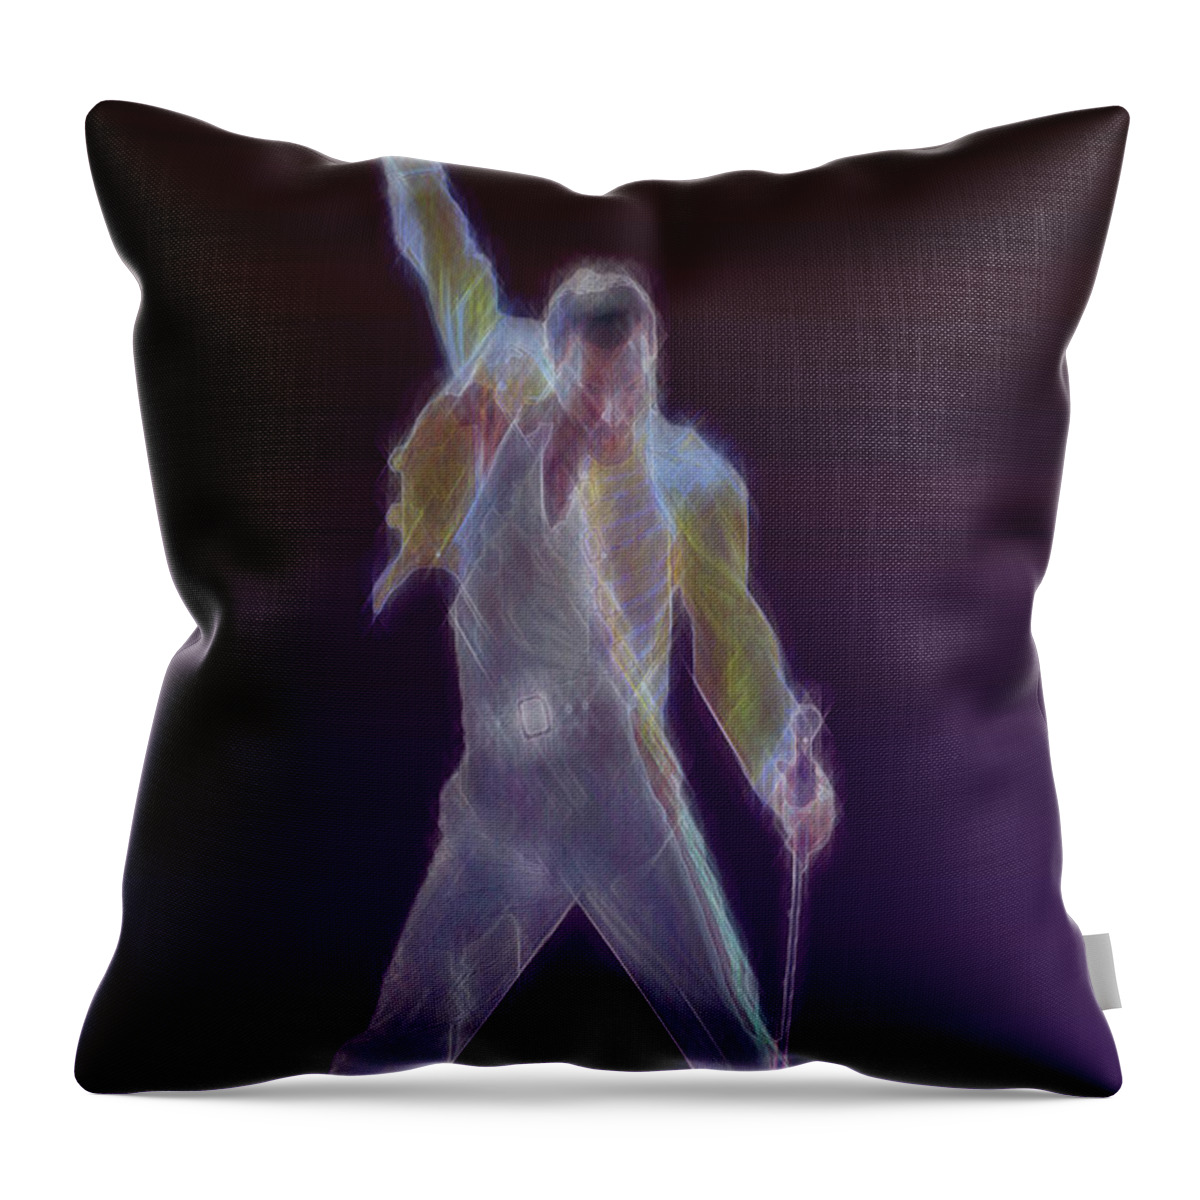 Freddy Throw Pillow featuring the digital art Mr. Fahrenheit by Kenneth Armand Johnson